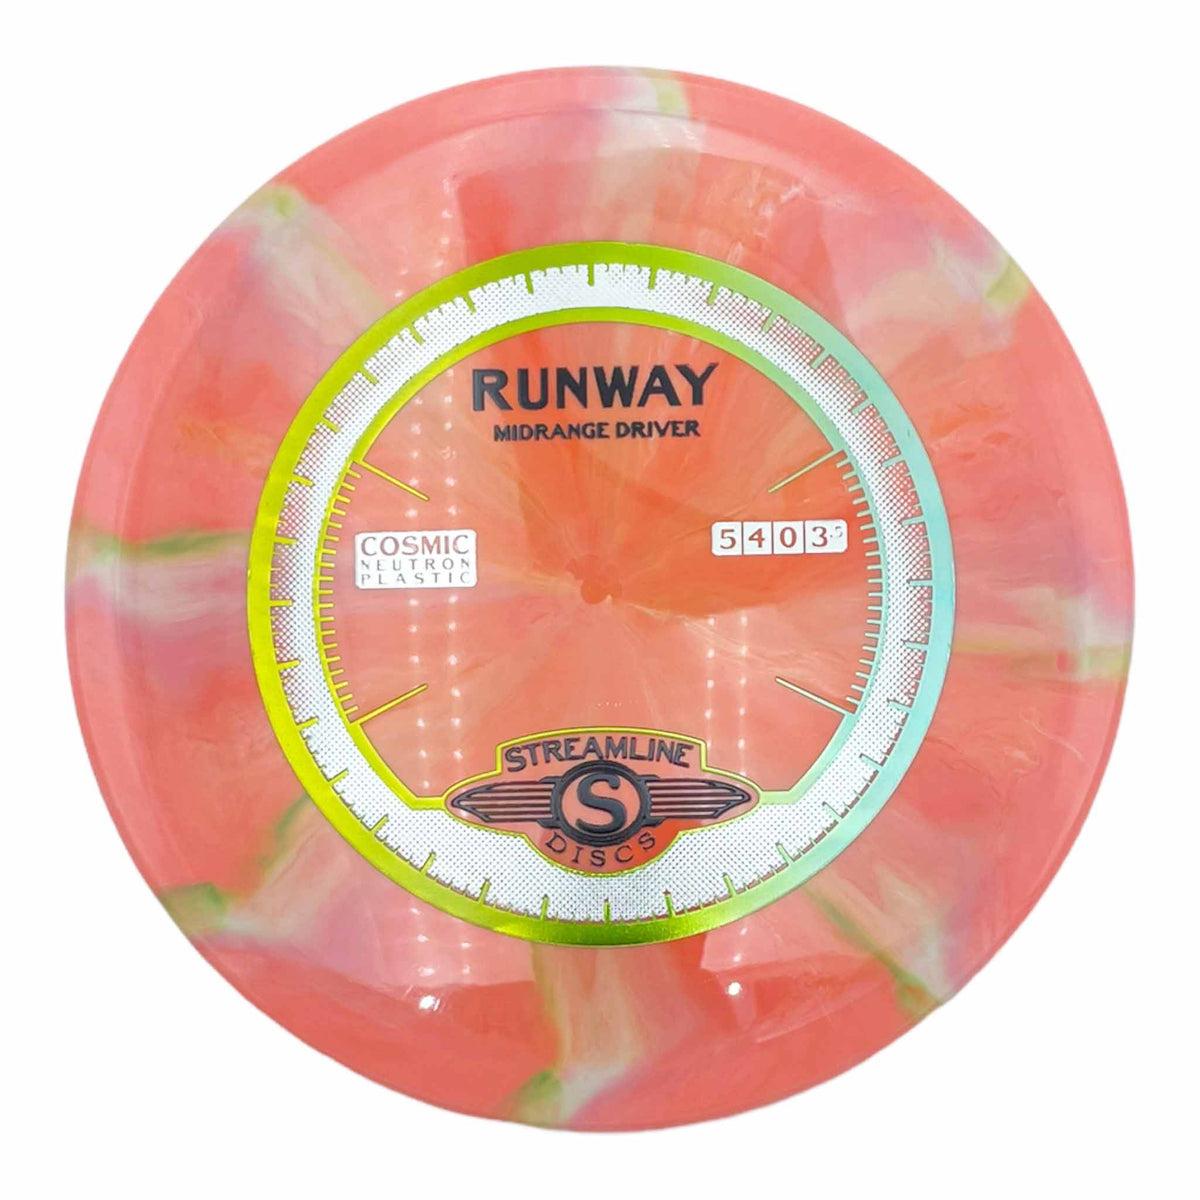 Streamline Discs Cosmic Neutron Runway midrange - Pink